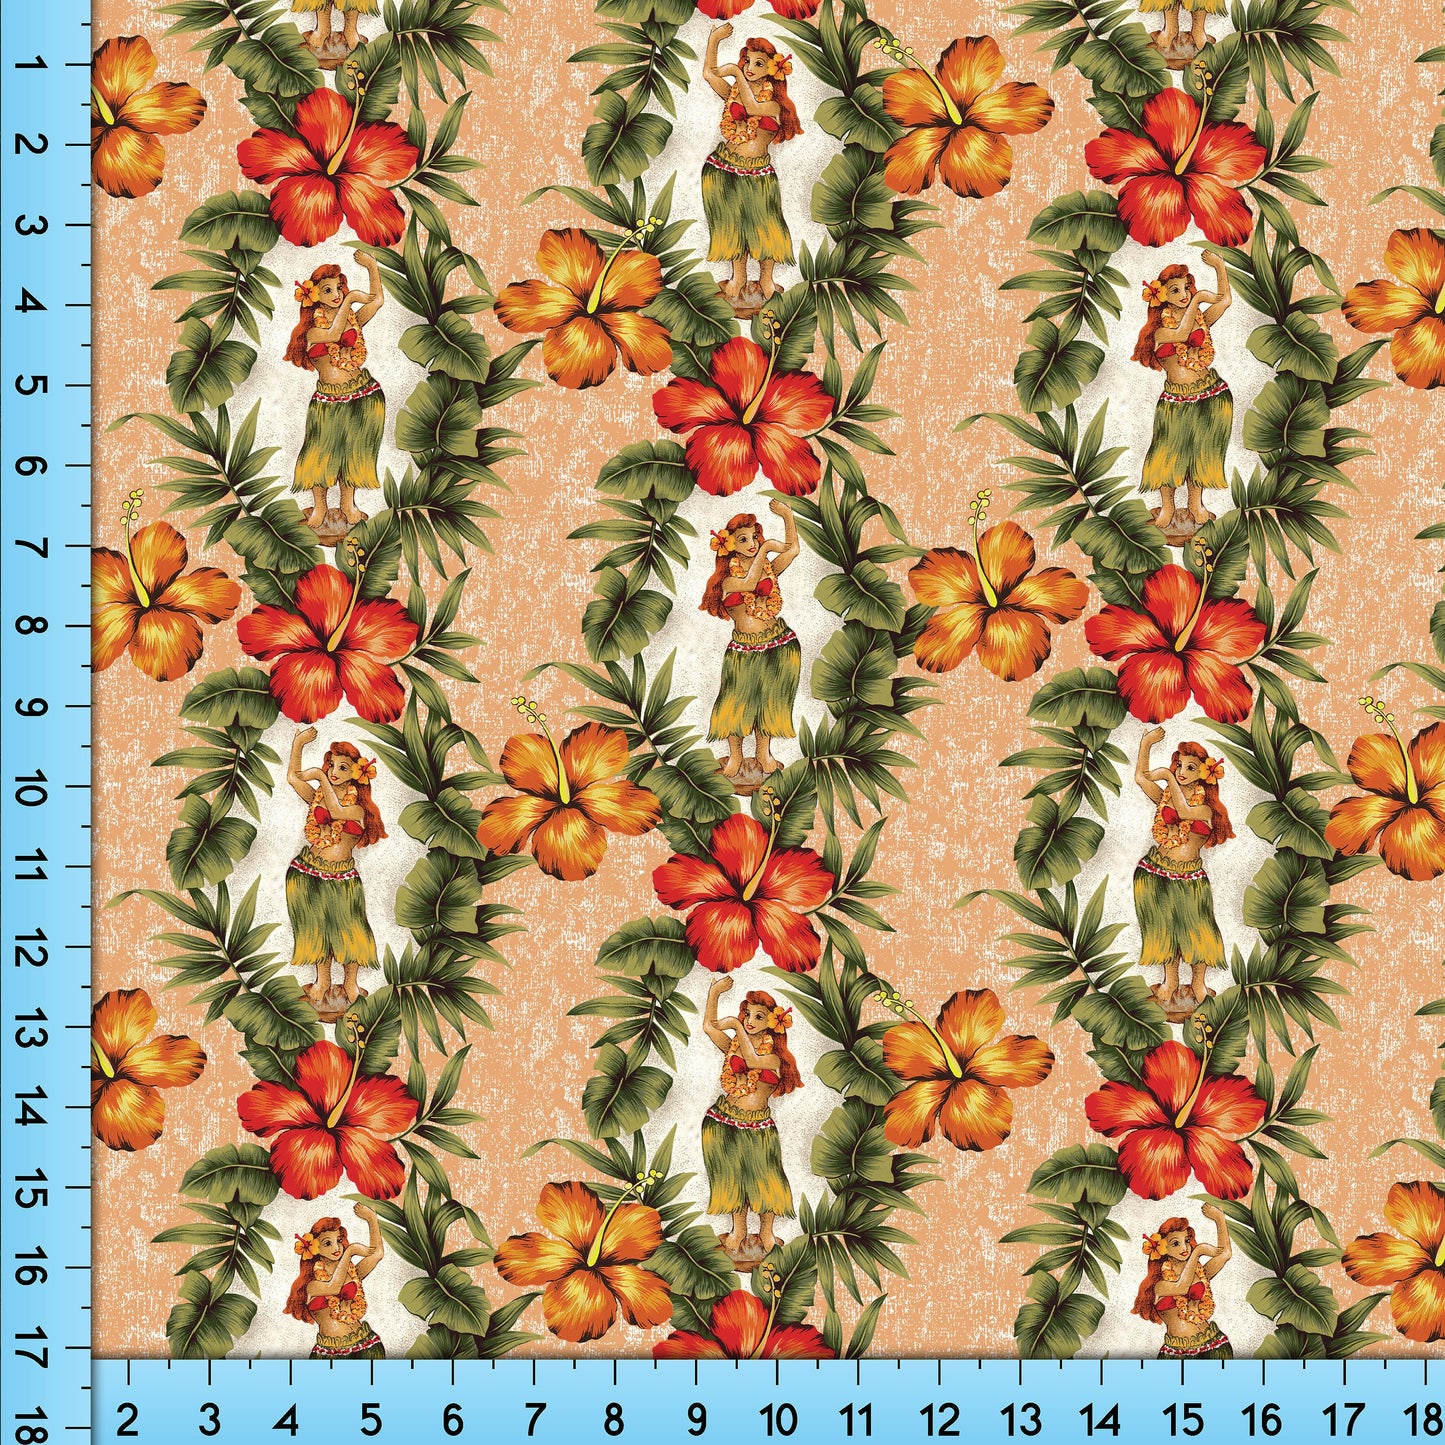 Hula Girl Hibiscus Flower Fabric, Tan Tropical Hawaiian Shirt Floral Fabric Pattern By the Yard